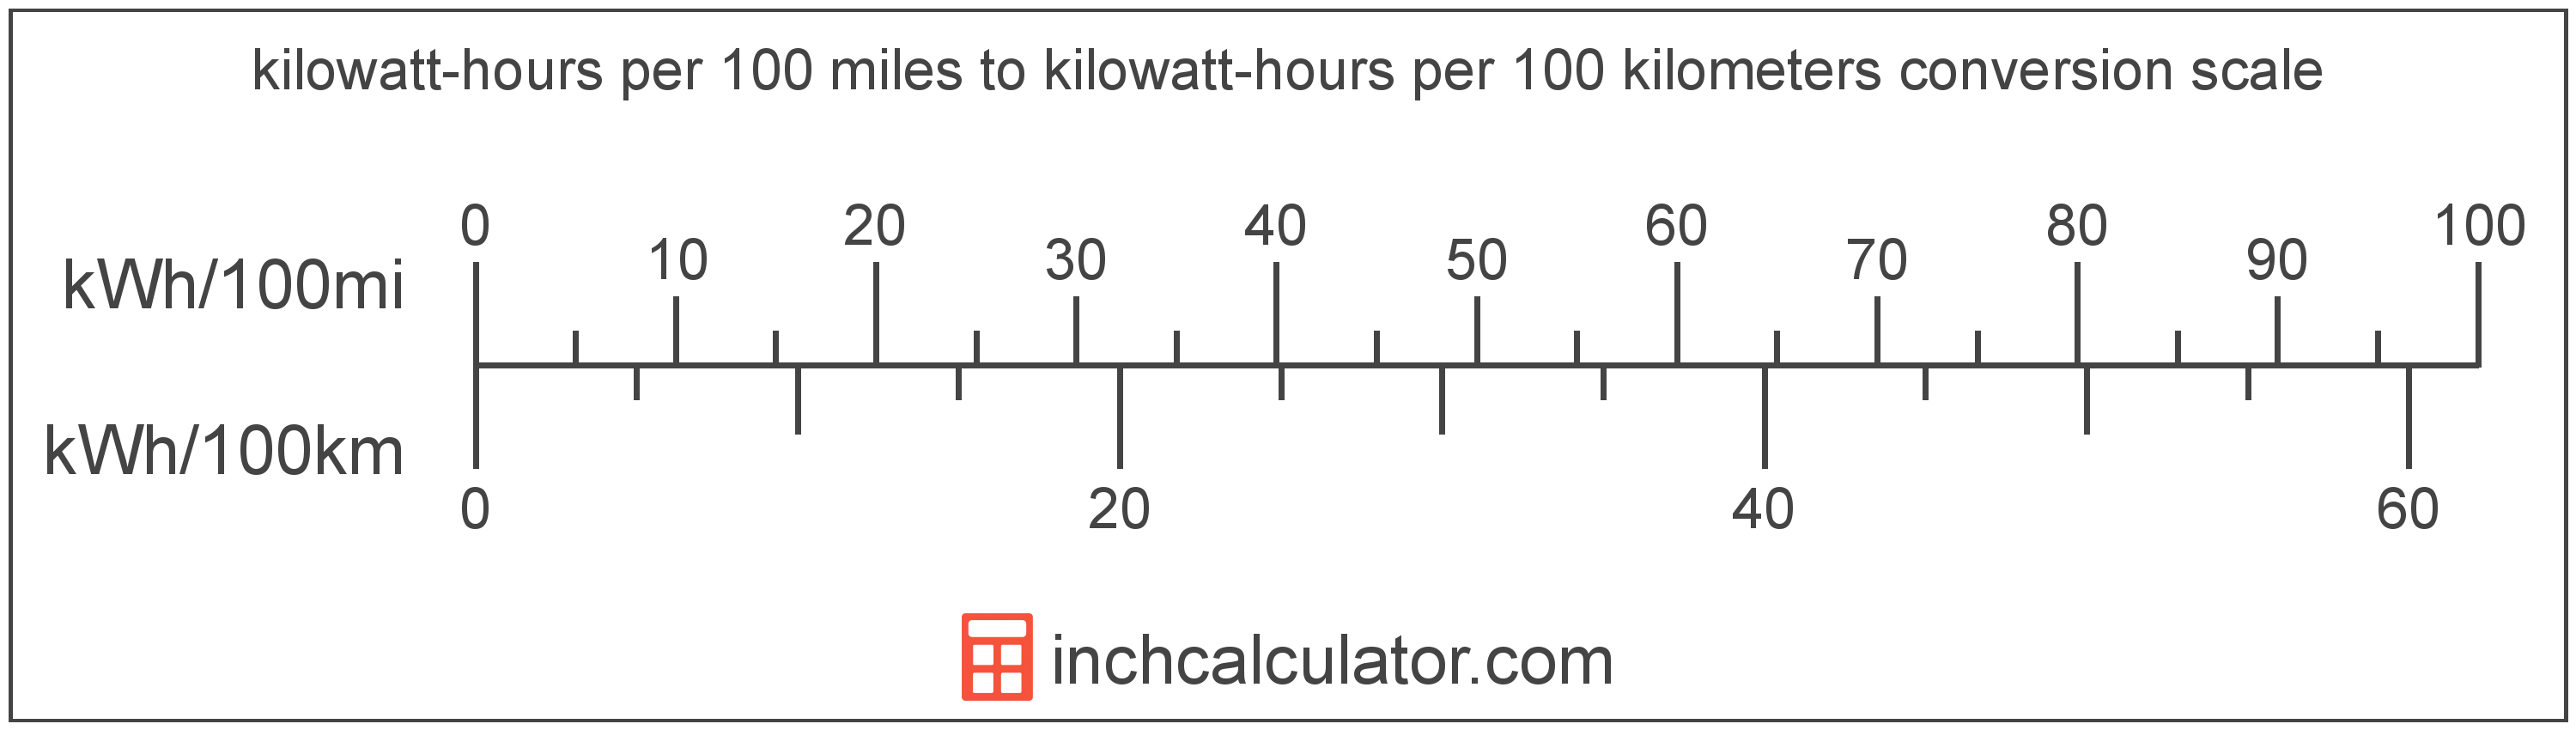 conversion scale showing kilowatt-hours per 100 miles and equivalent kilowatt-hours per 100 kilometers electric car efficiency values